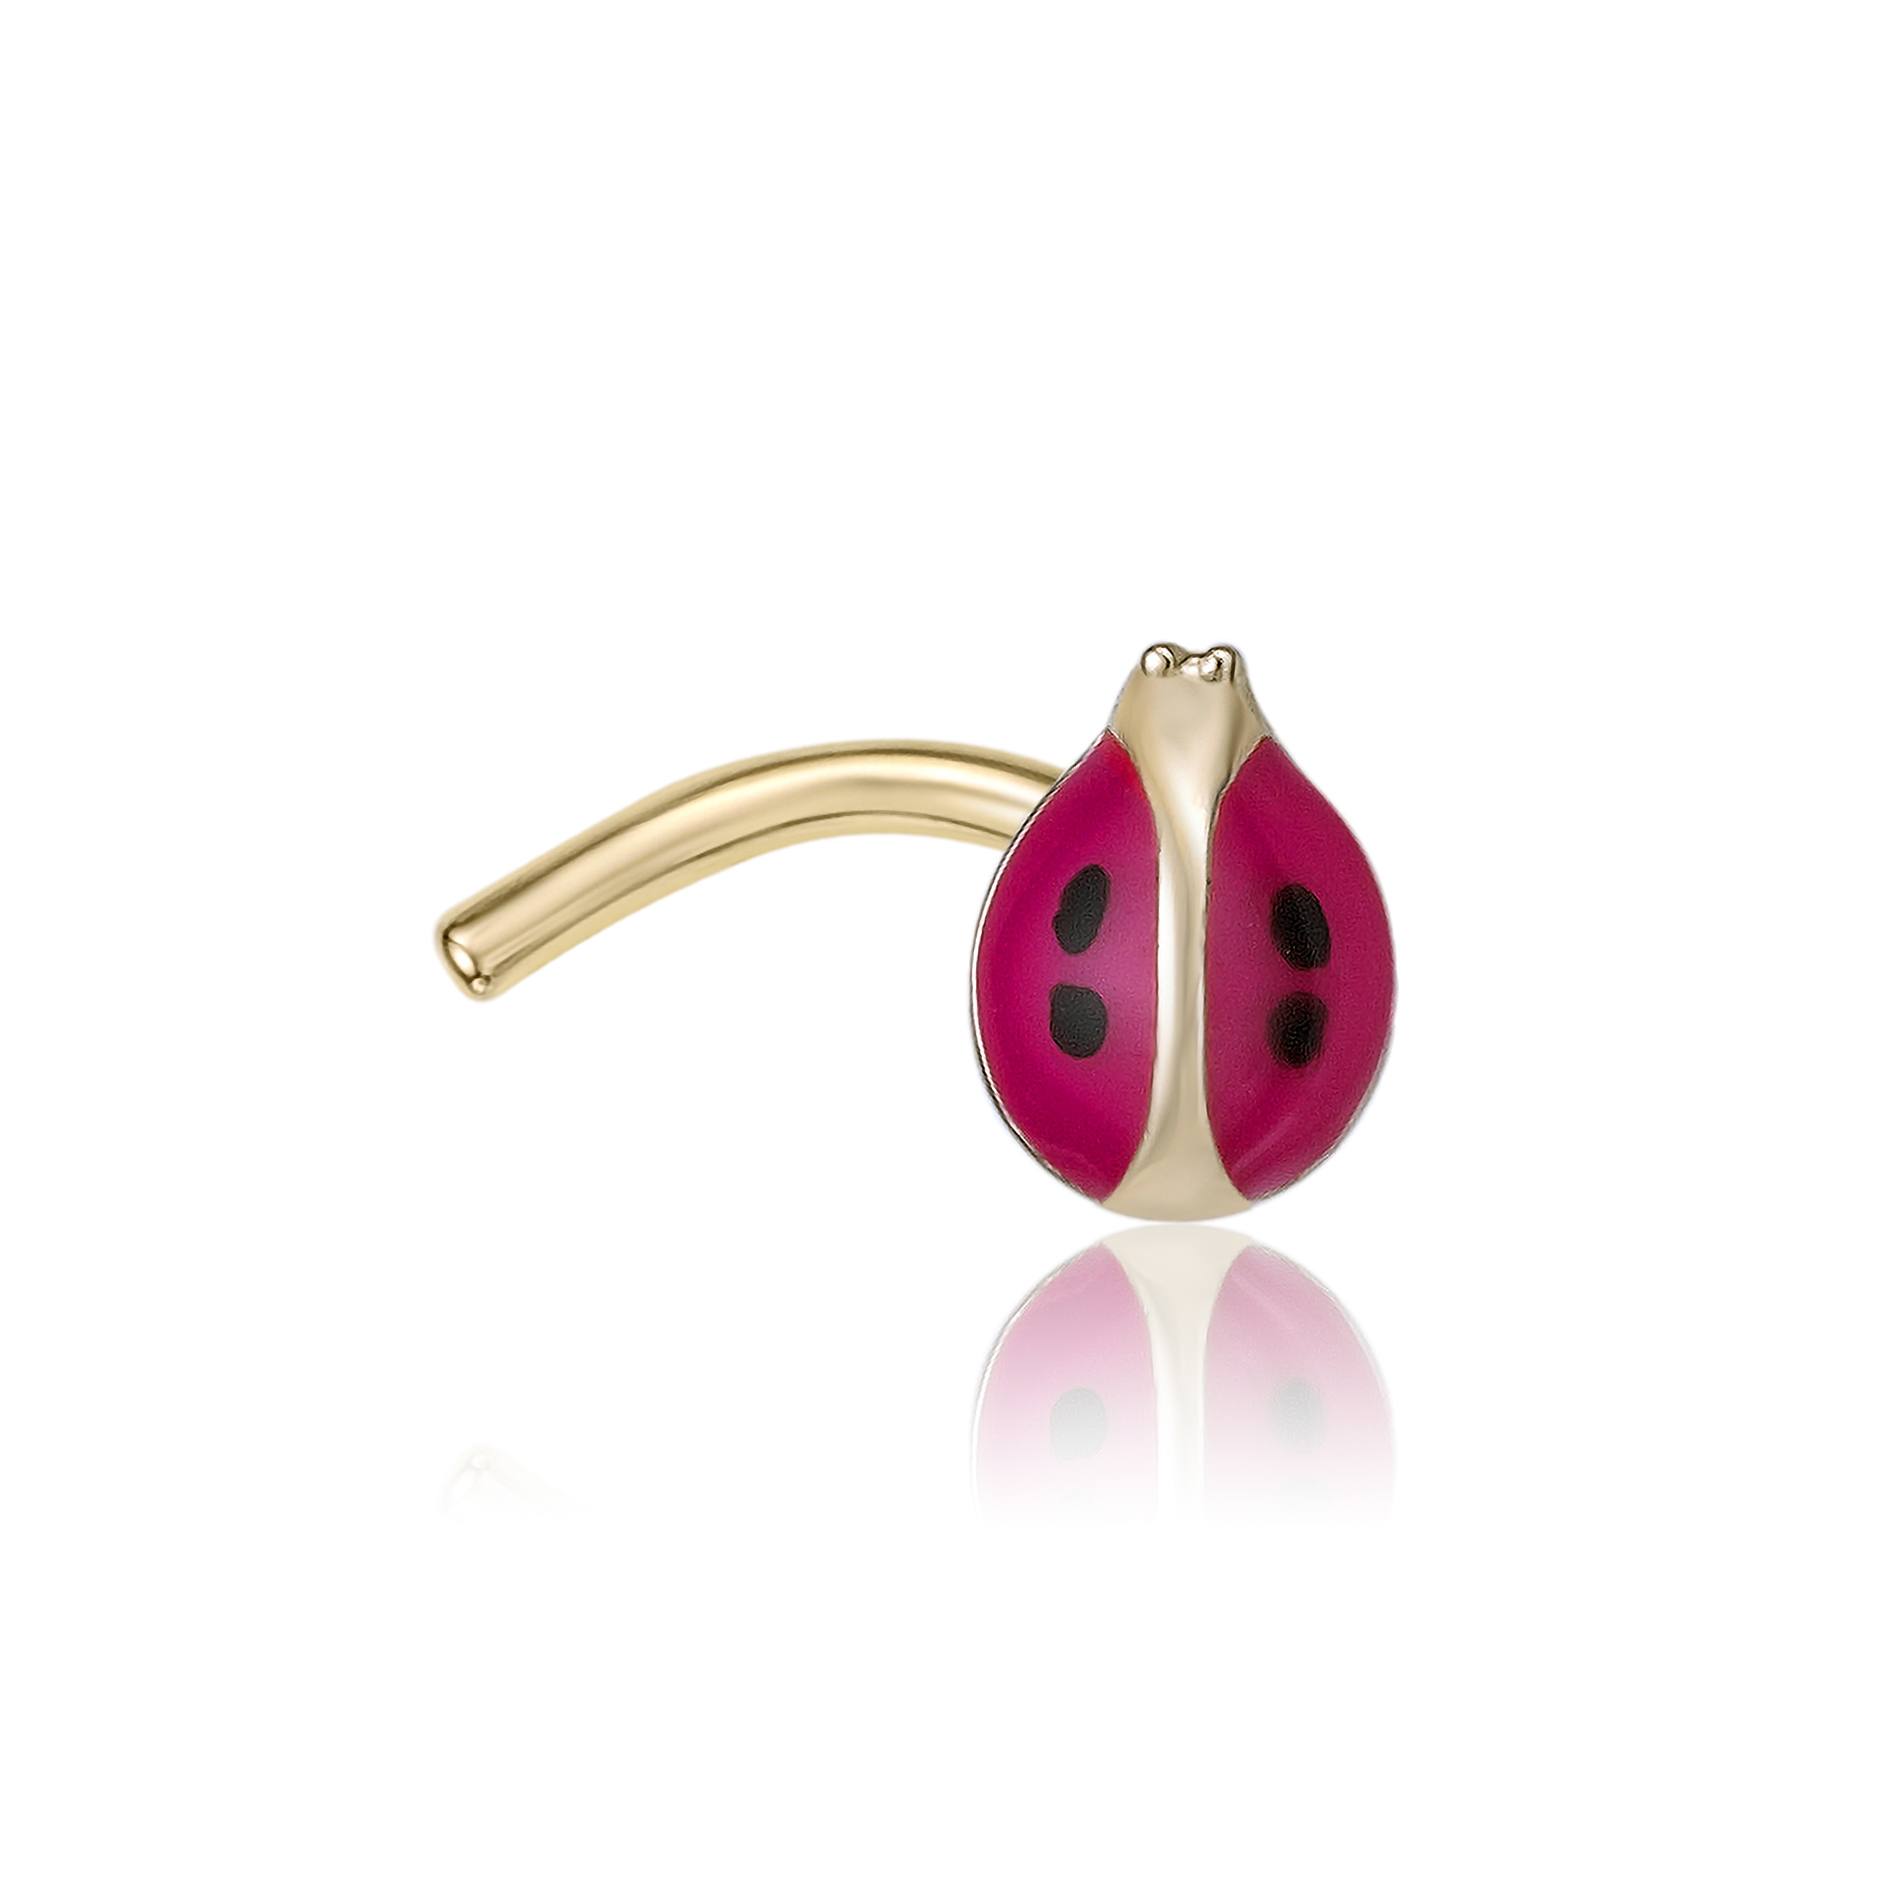 Lavari Jewelers Women's 4.7 MM Red and Black Enamel Ladybug Curved Nose Ring, 14K Yellow Gold, 20 Gauge